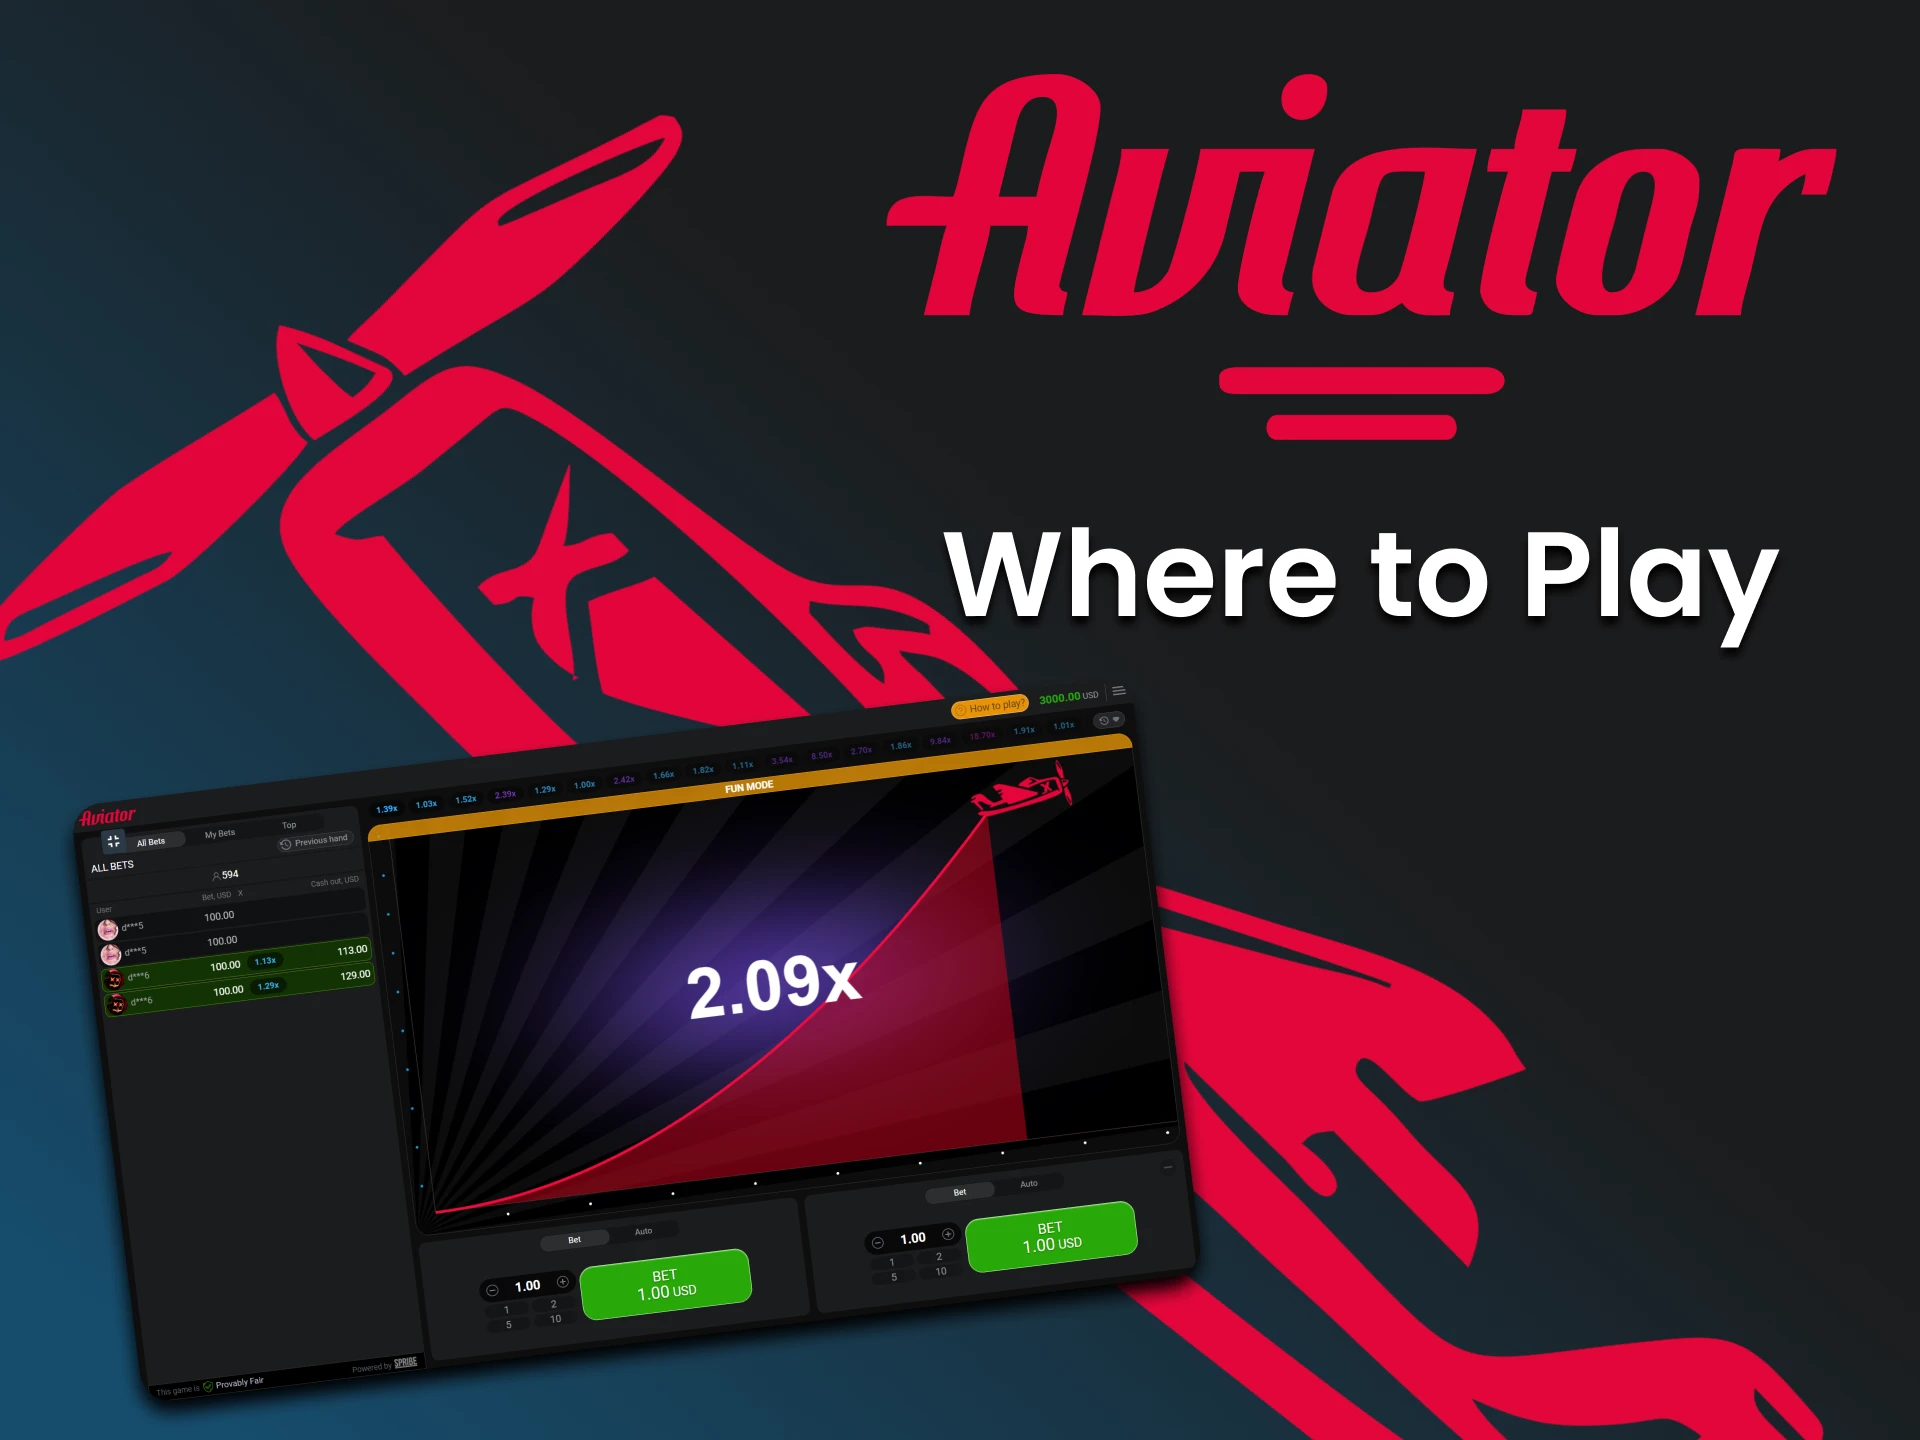 Choose a convenient platform for playing Aviator.